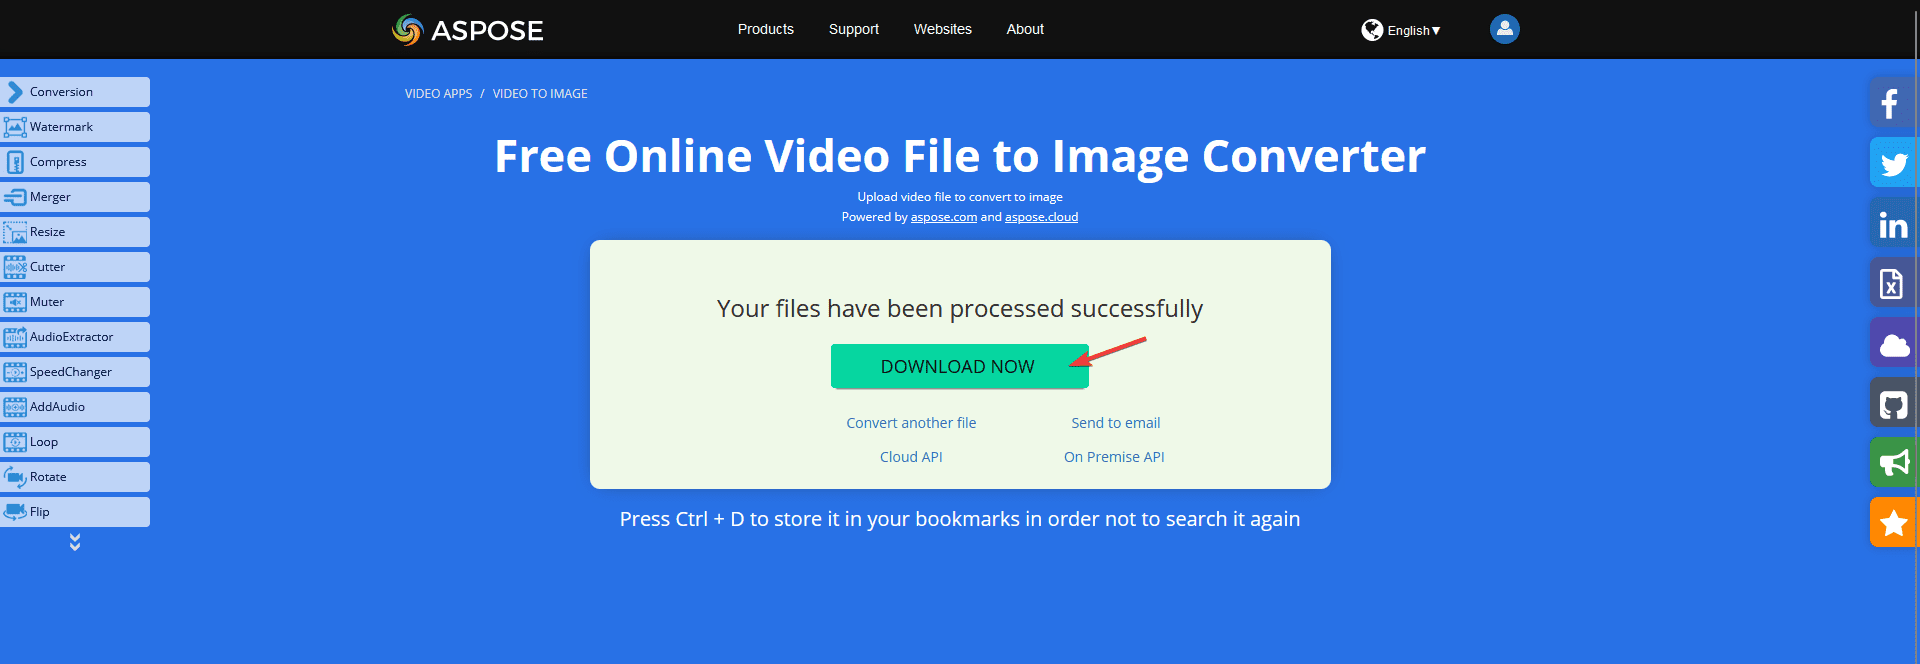 Aspose video image converter video download